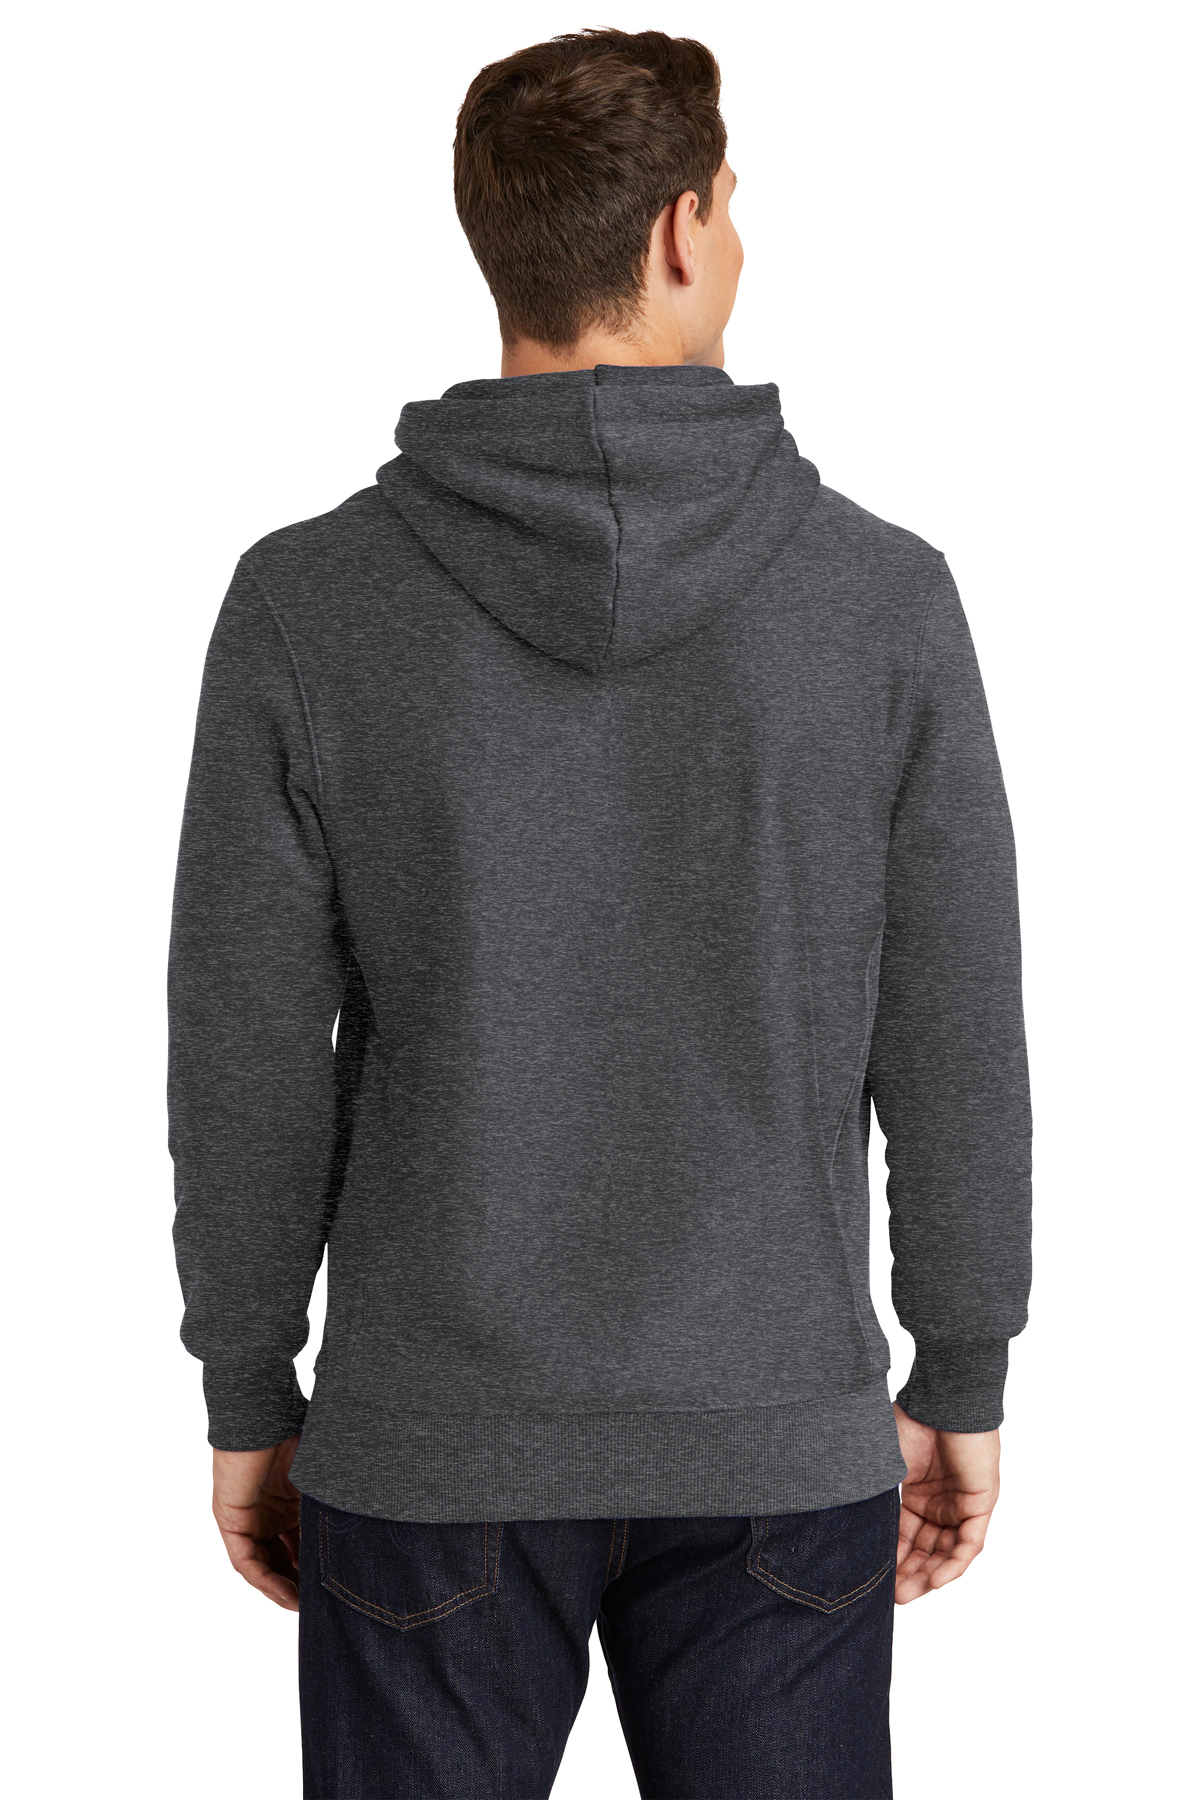 Sport-Tek Super Heavyweight Pullover Hooded | Sport-Tek Product Sweatshirt |